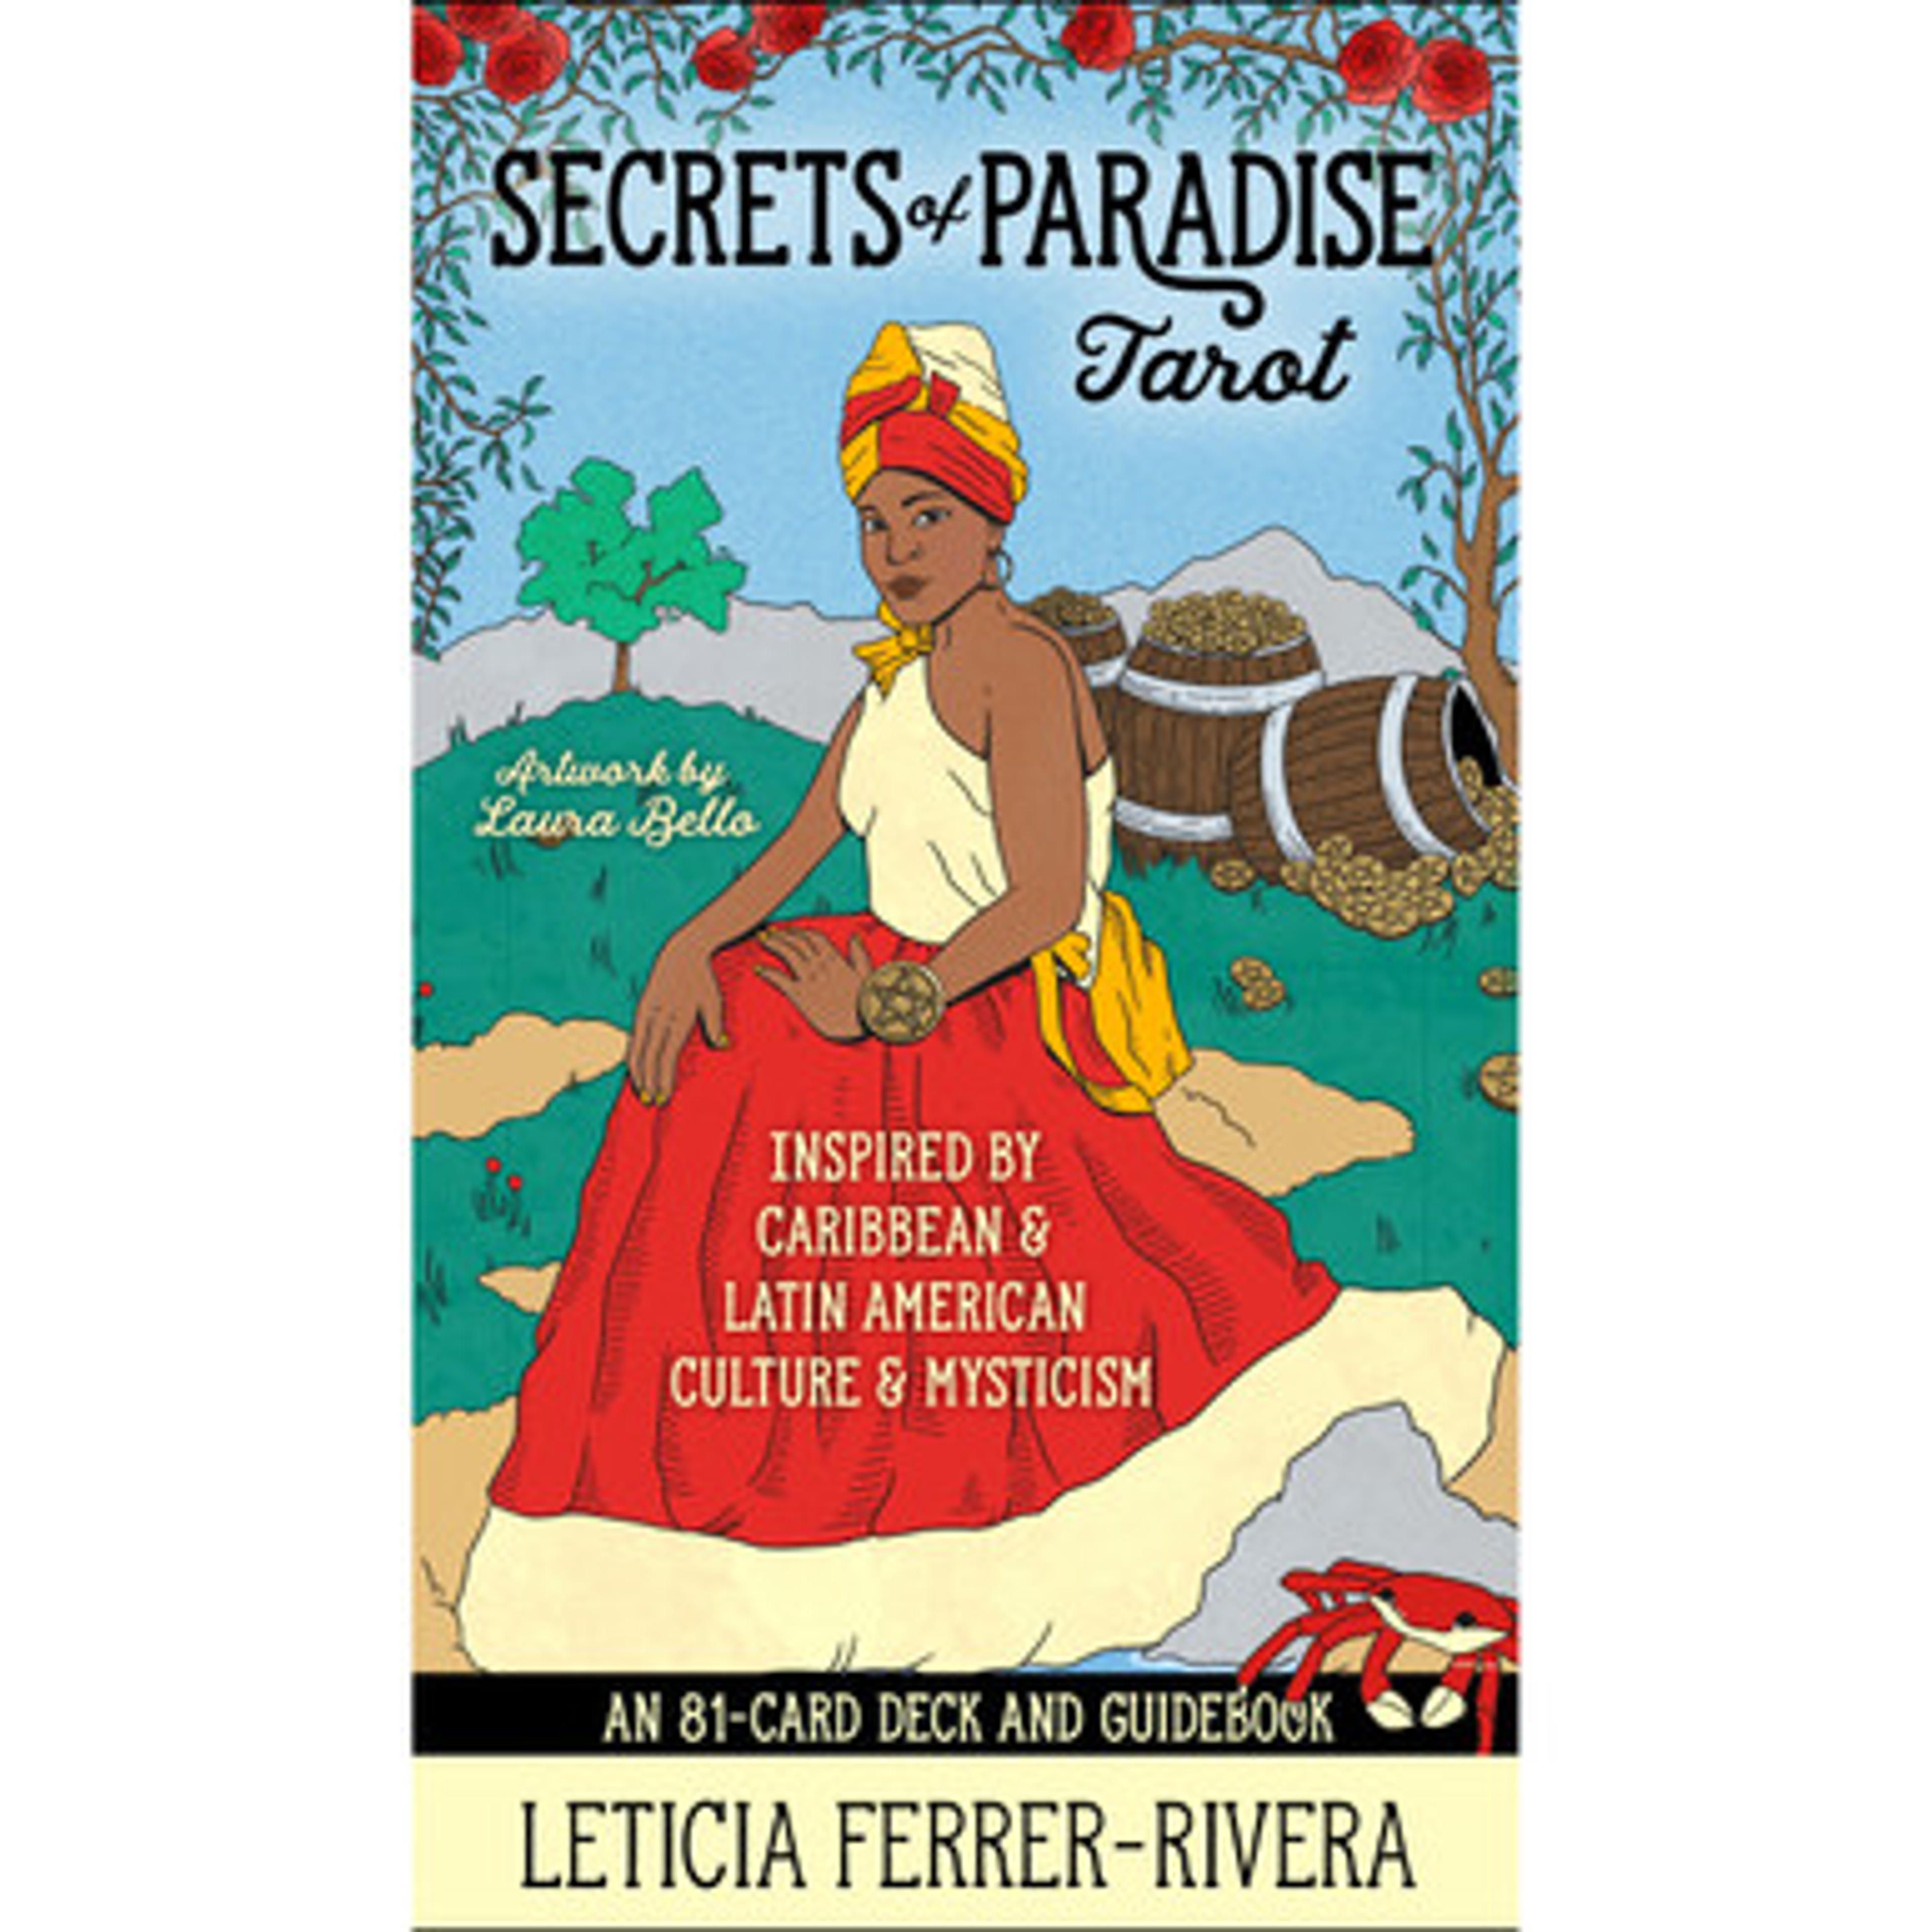 Wholesale Secrets of Paradise Tarot by Leticia Ferrer-Rivera